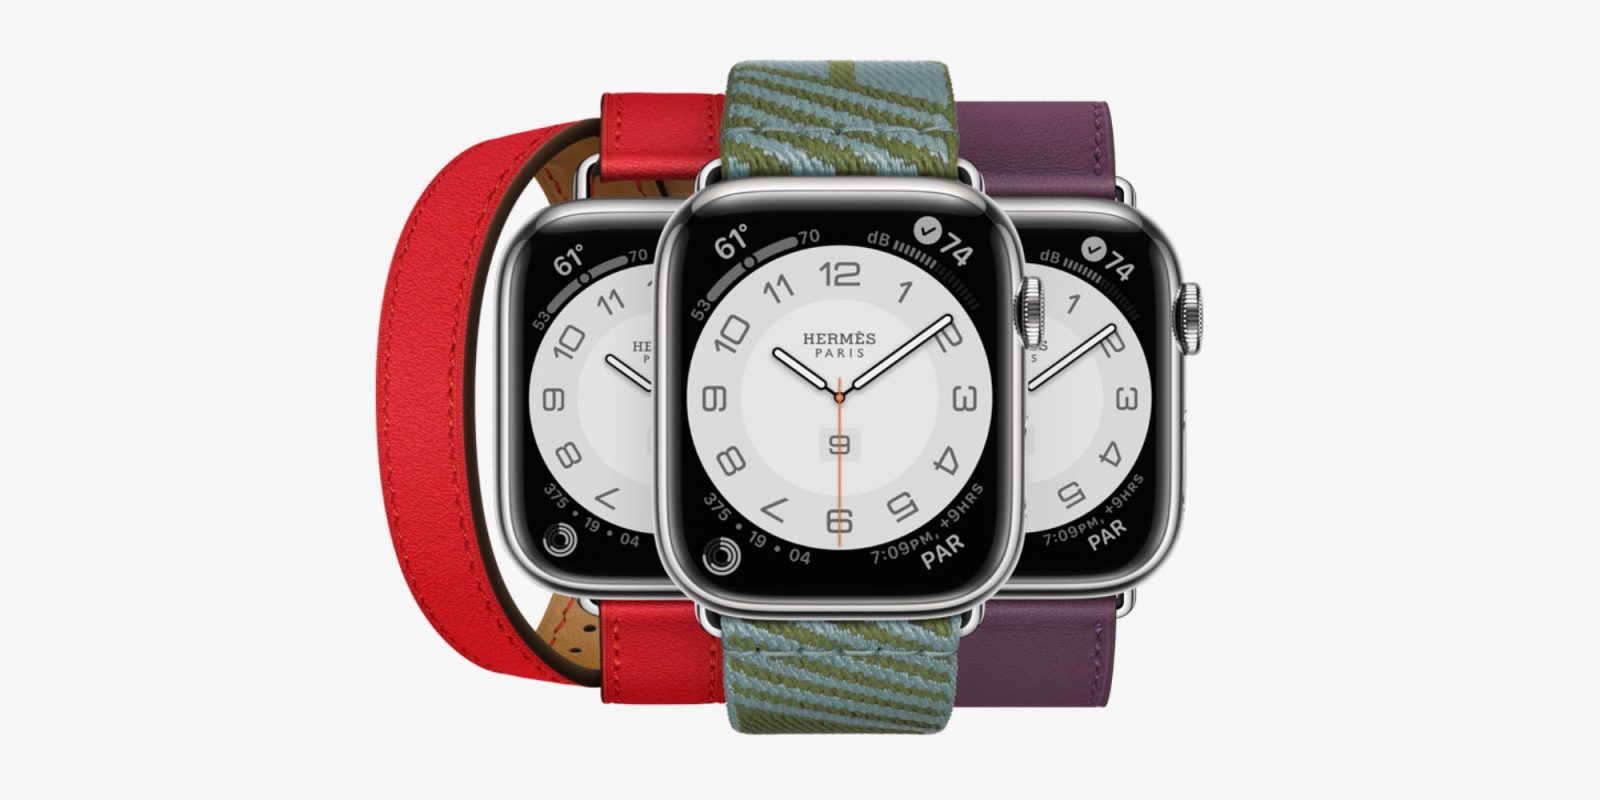 Apple-Watch-Hermes-Pro-9to5mac